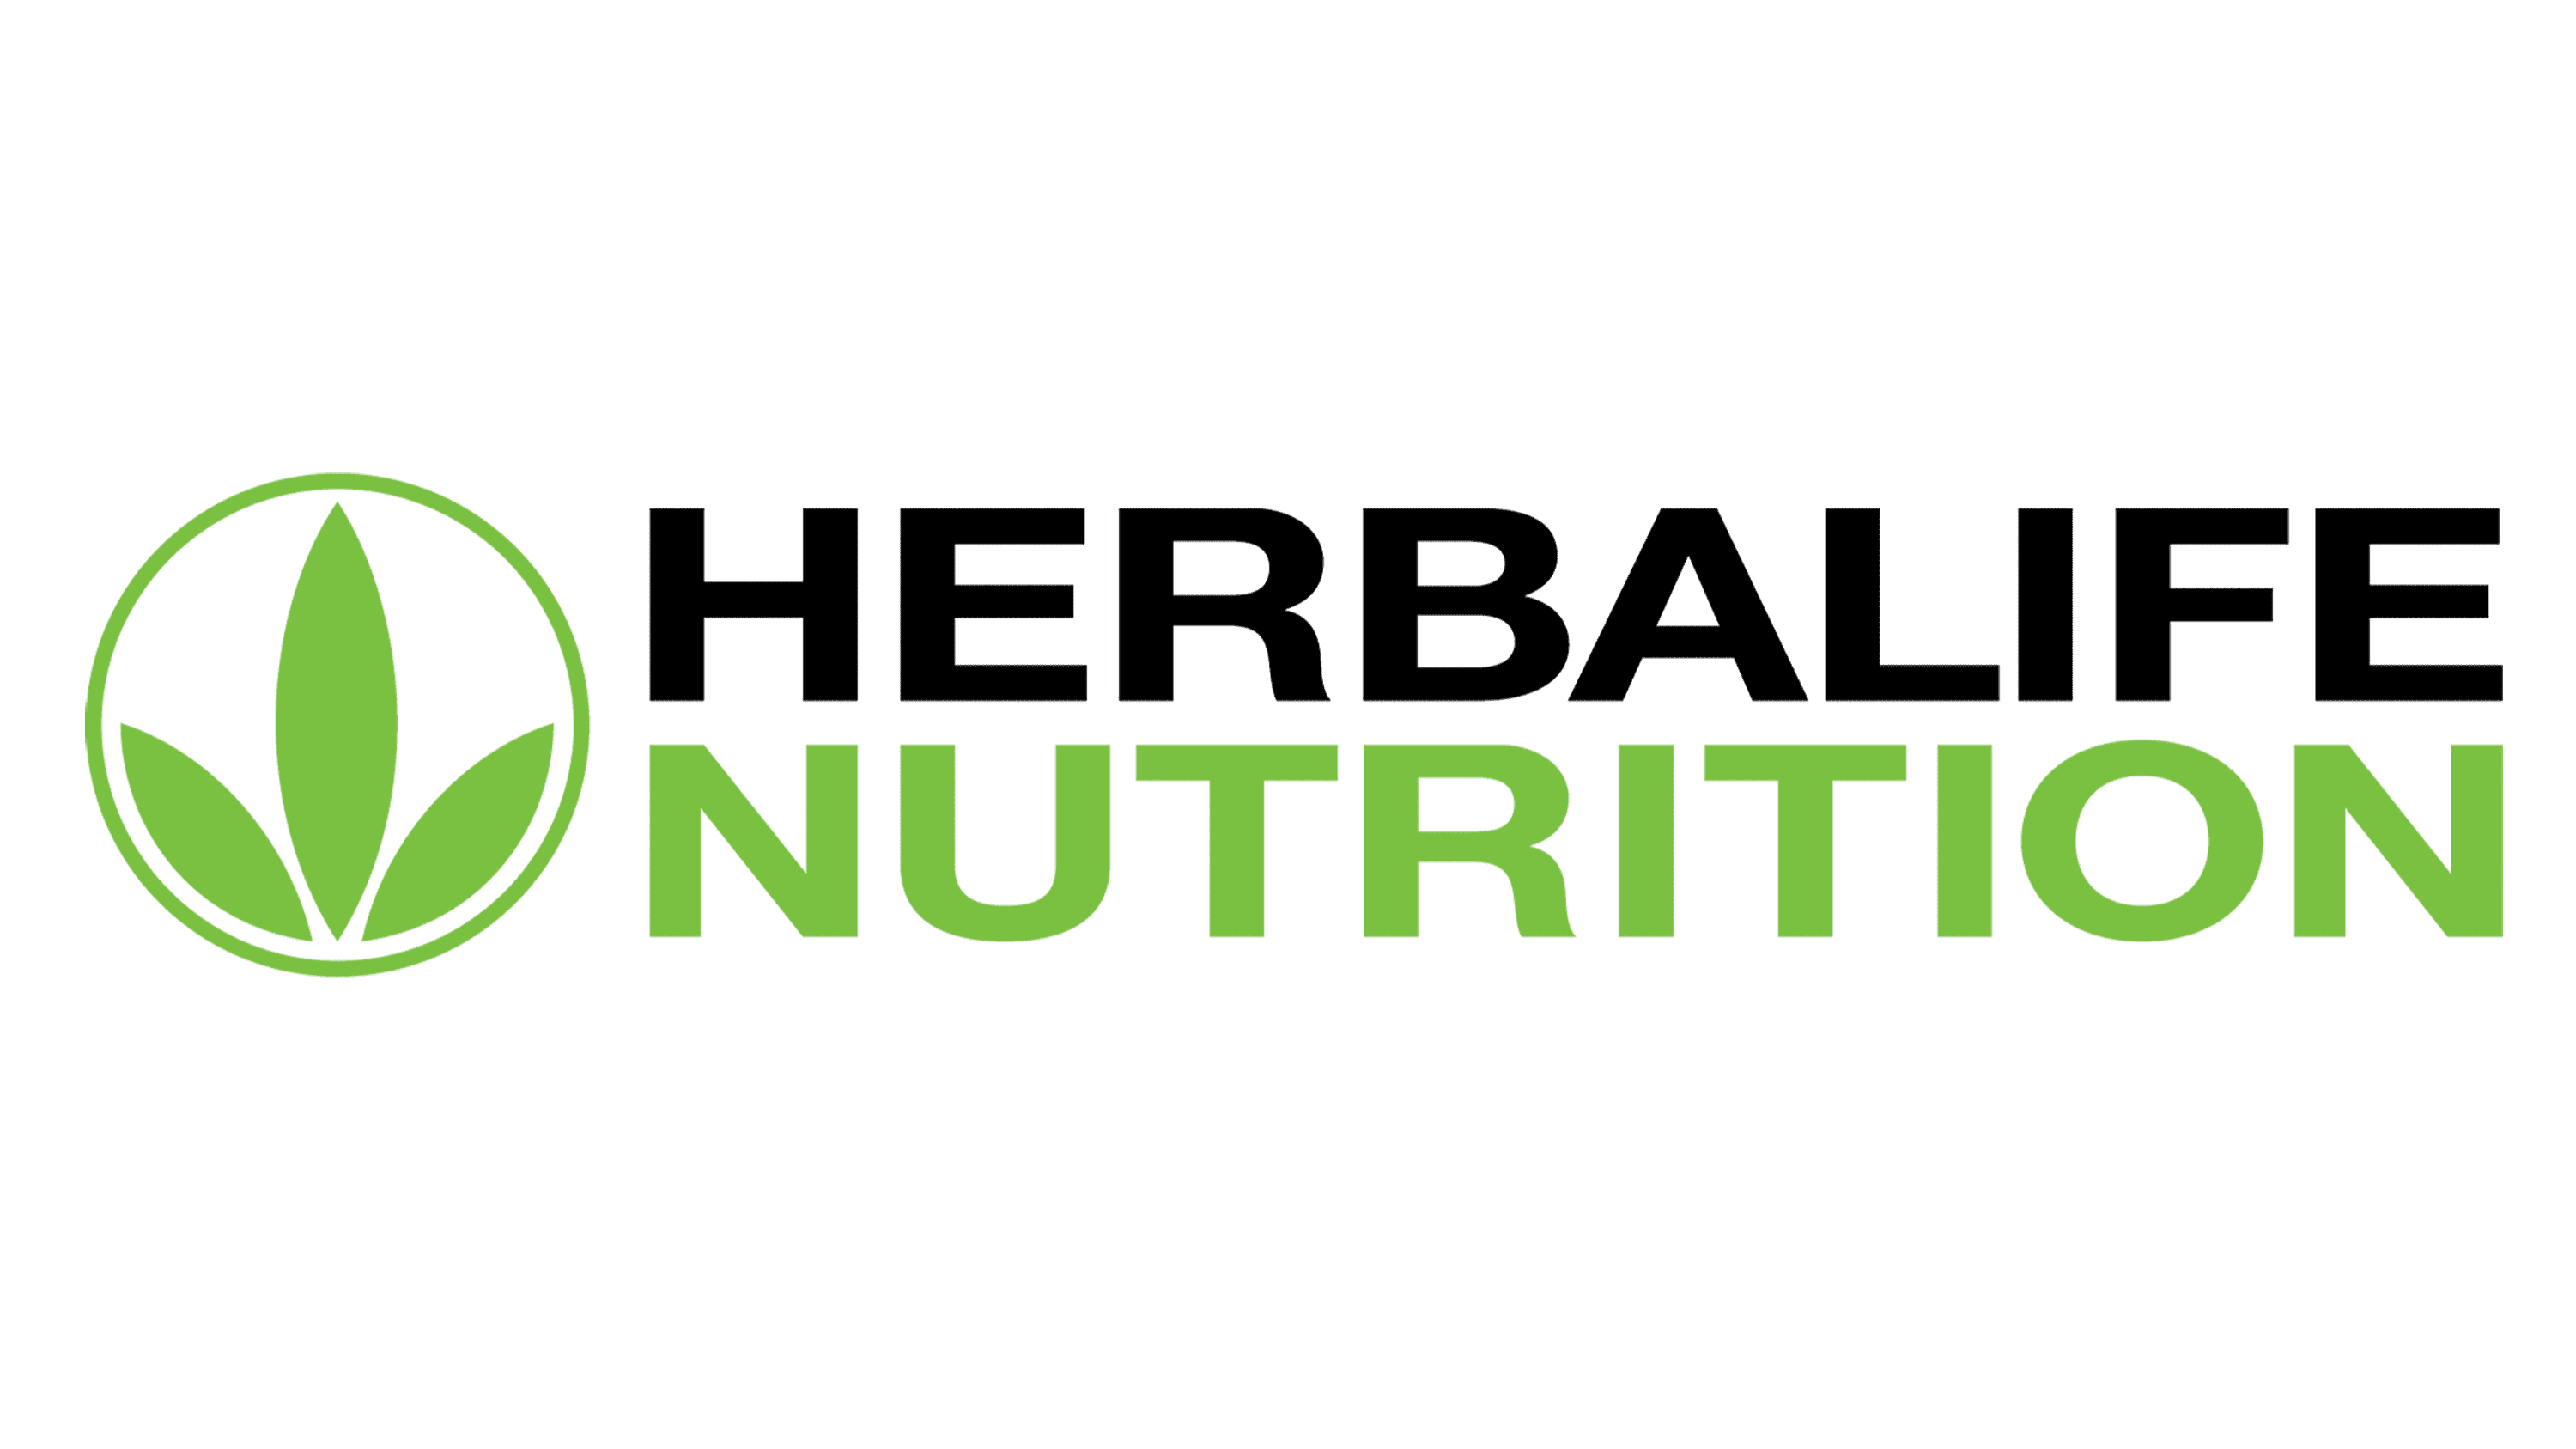 Herbalife-Logo